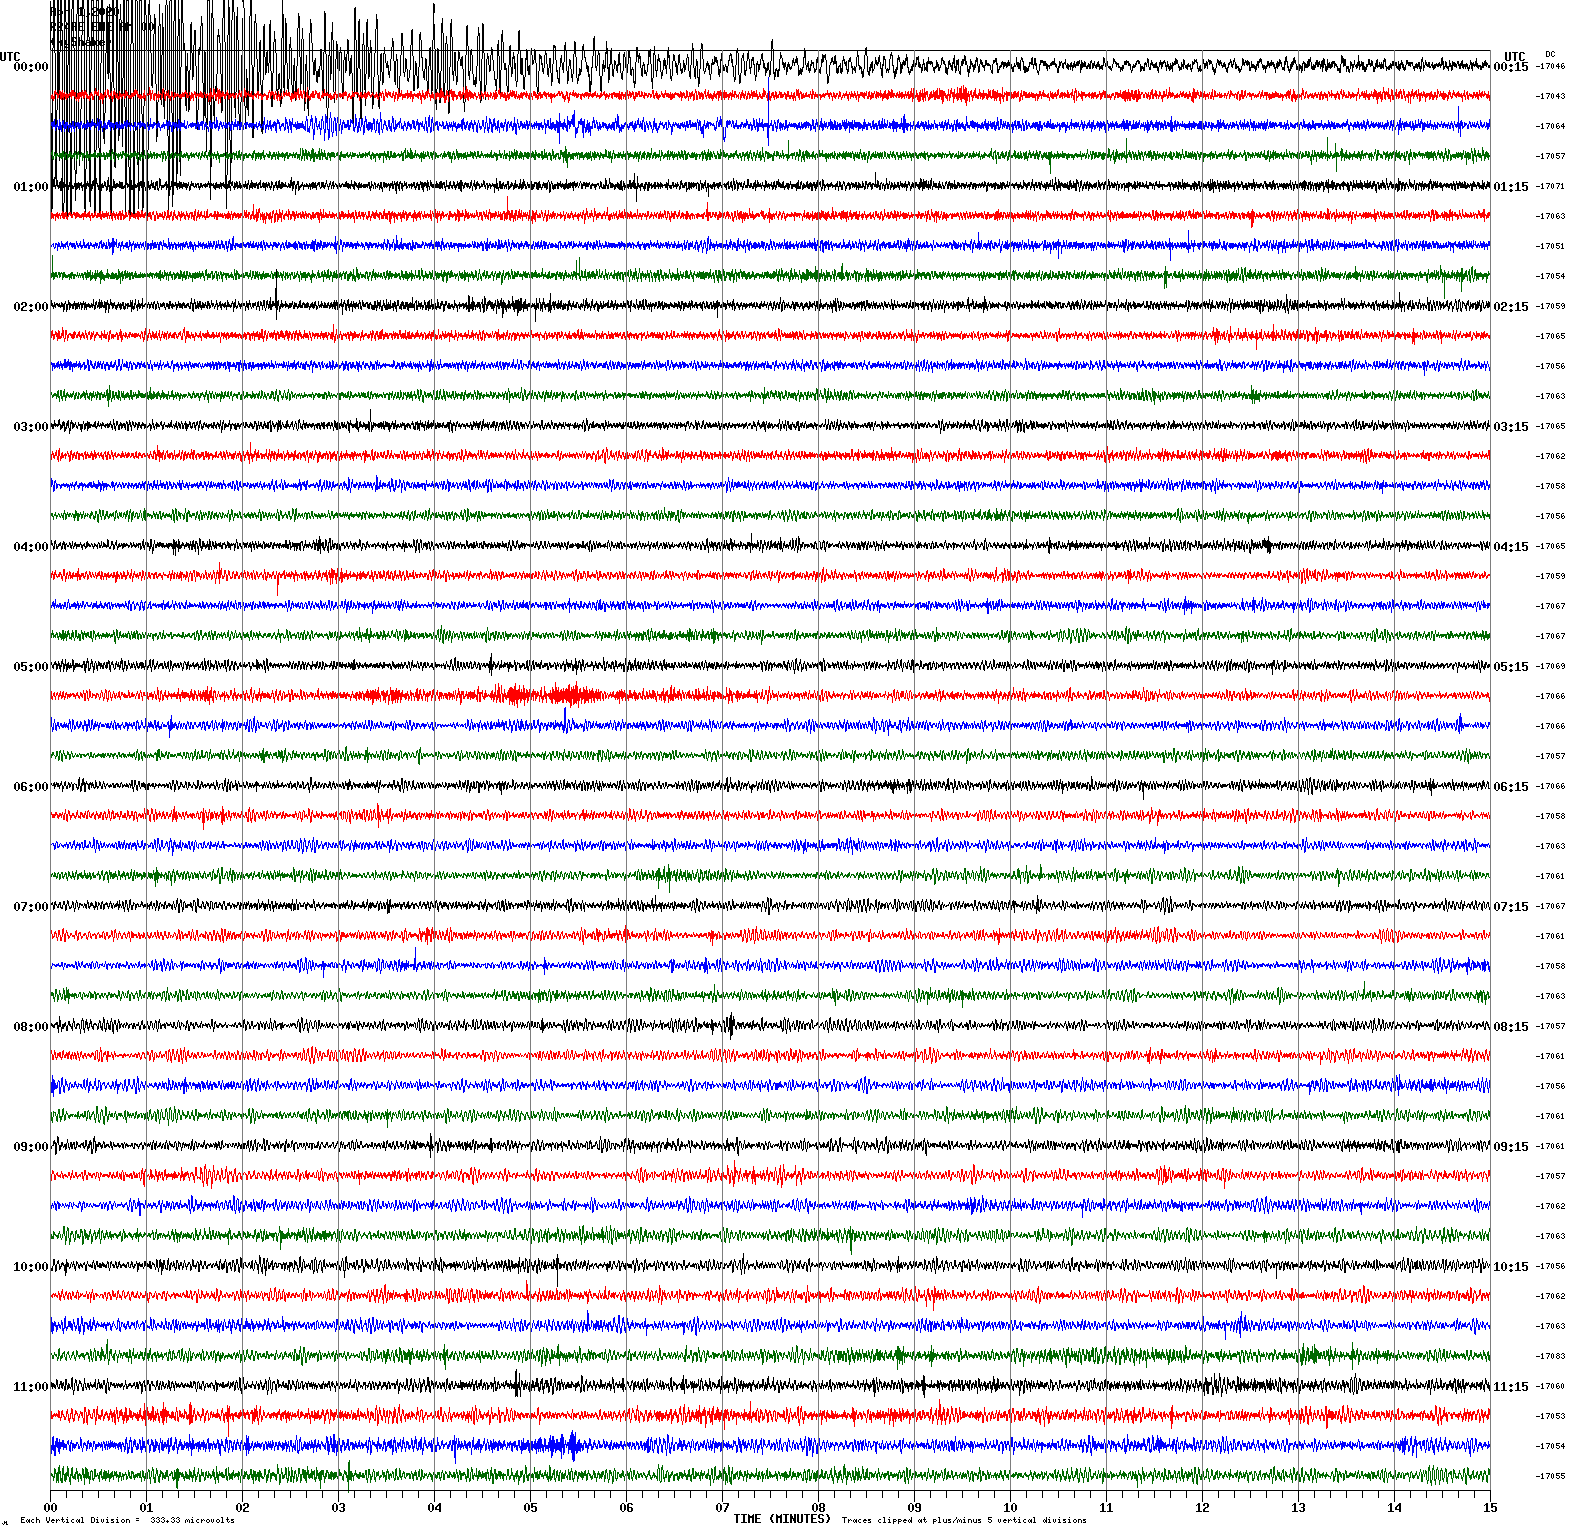 /seismic-data/R24AE/R24AE_EHE_AM_00.2020040100.gif